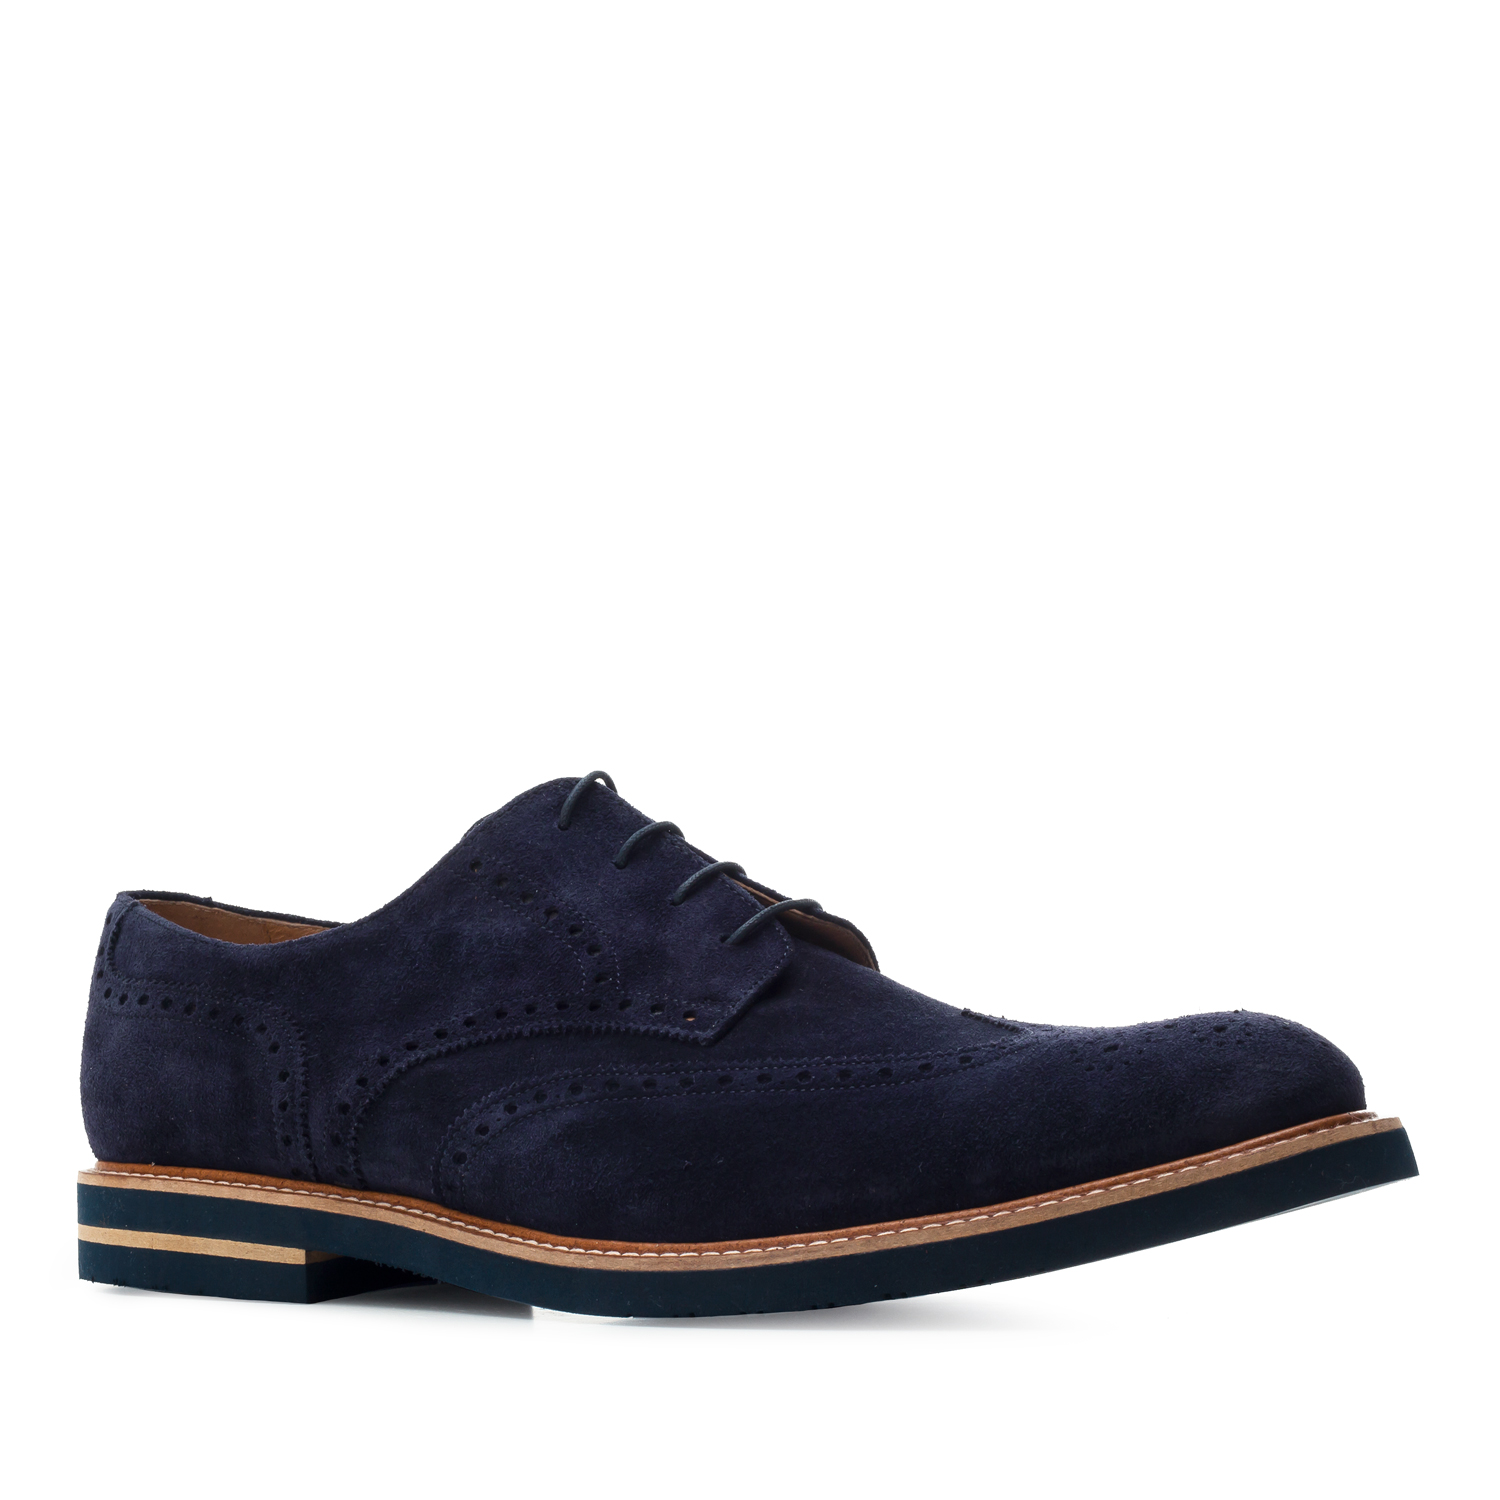 Schuhe im Oxford-Stil Rauleder Blau - MADE IN SPAIN - 